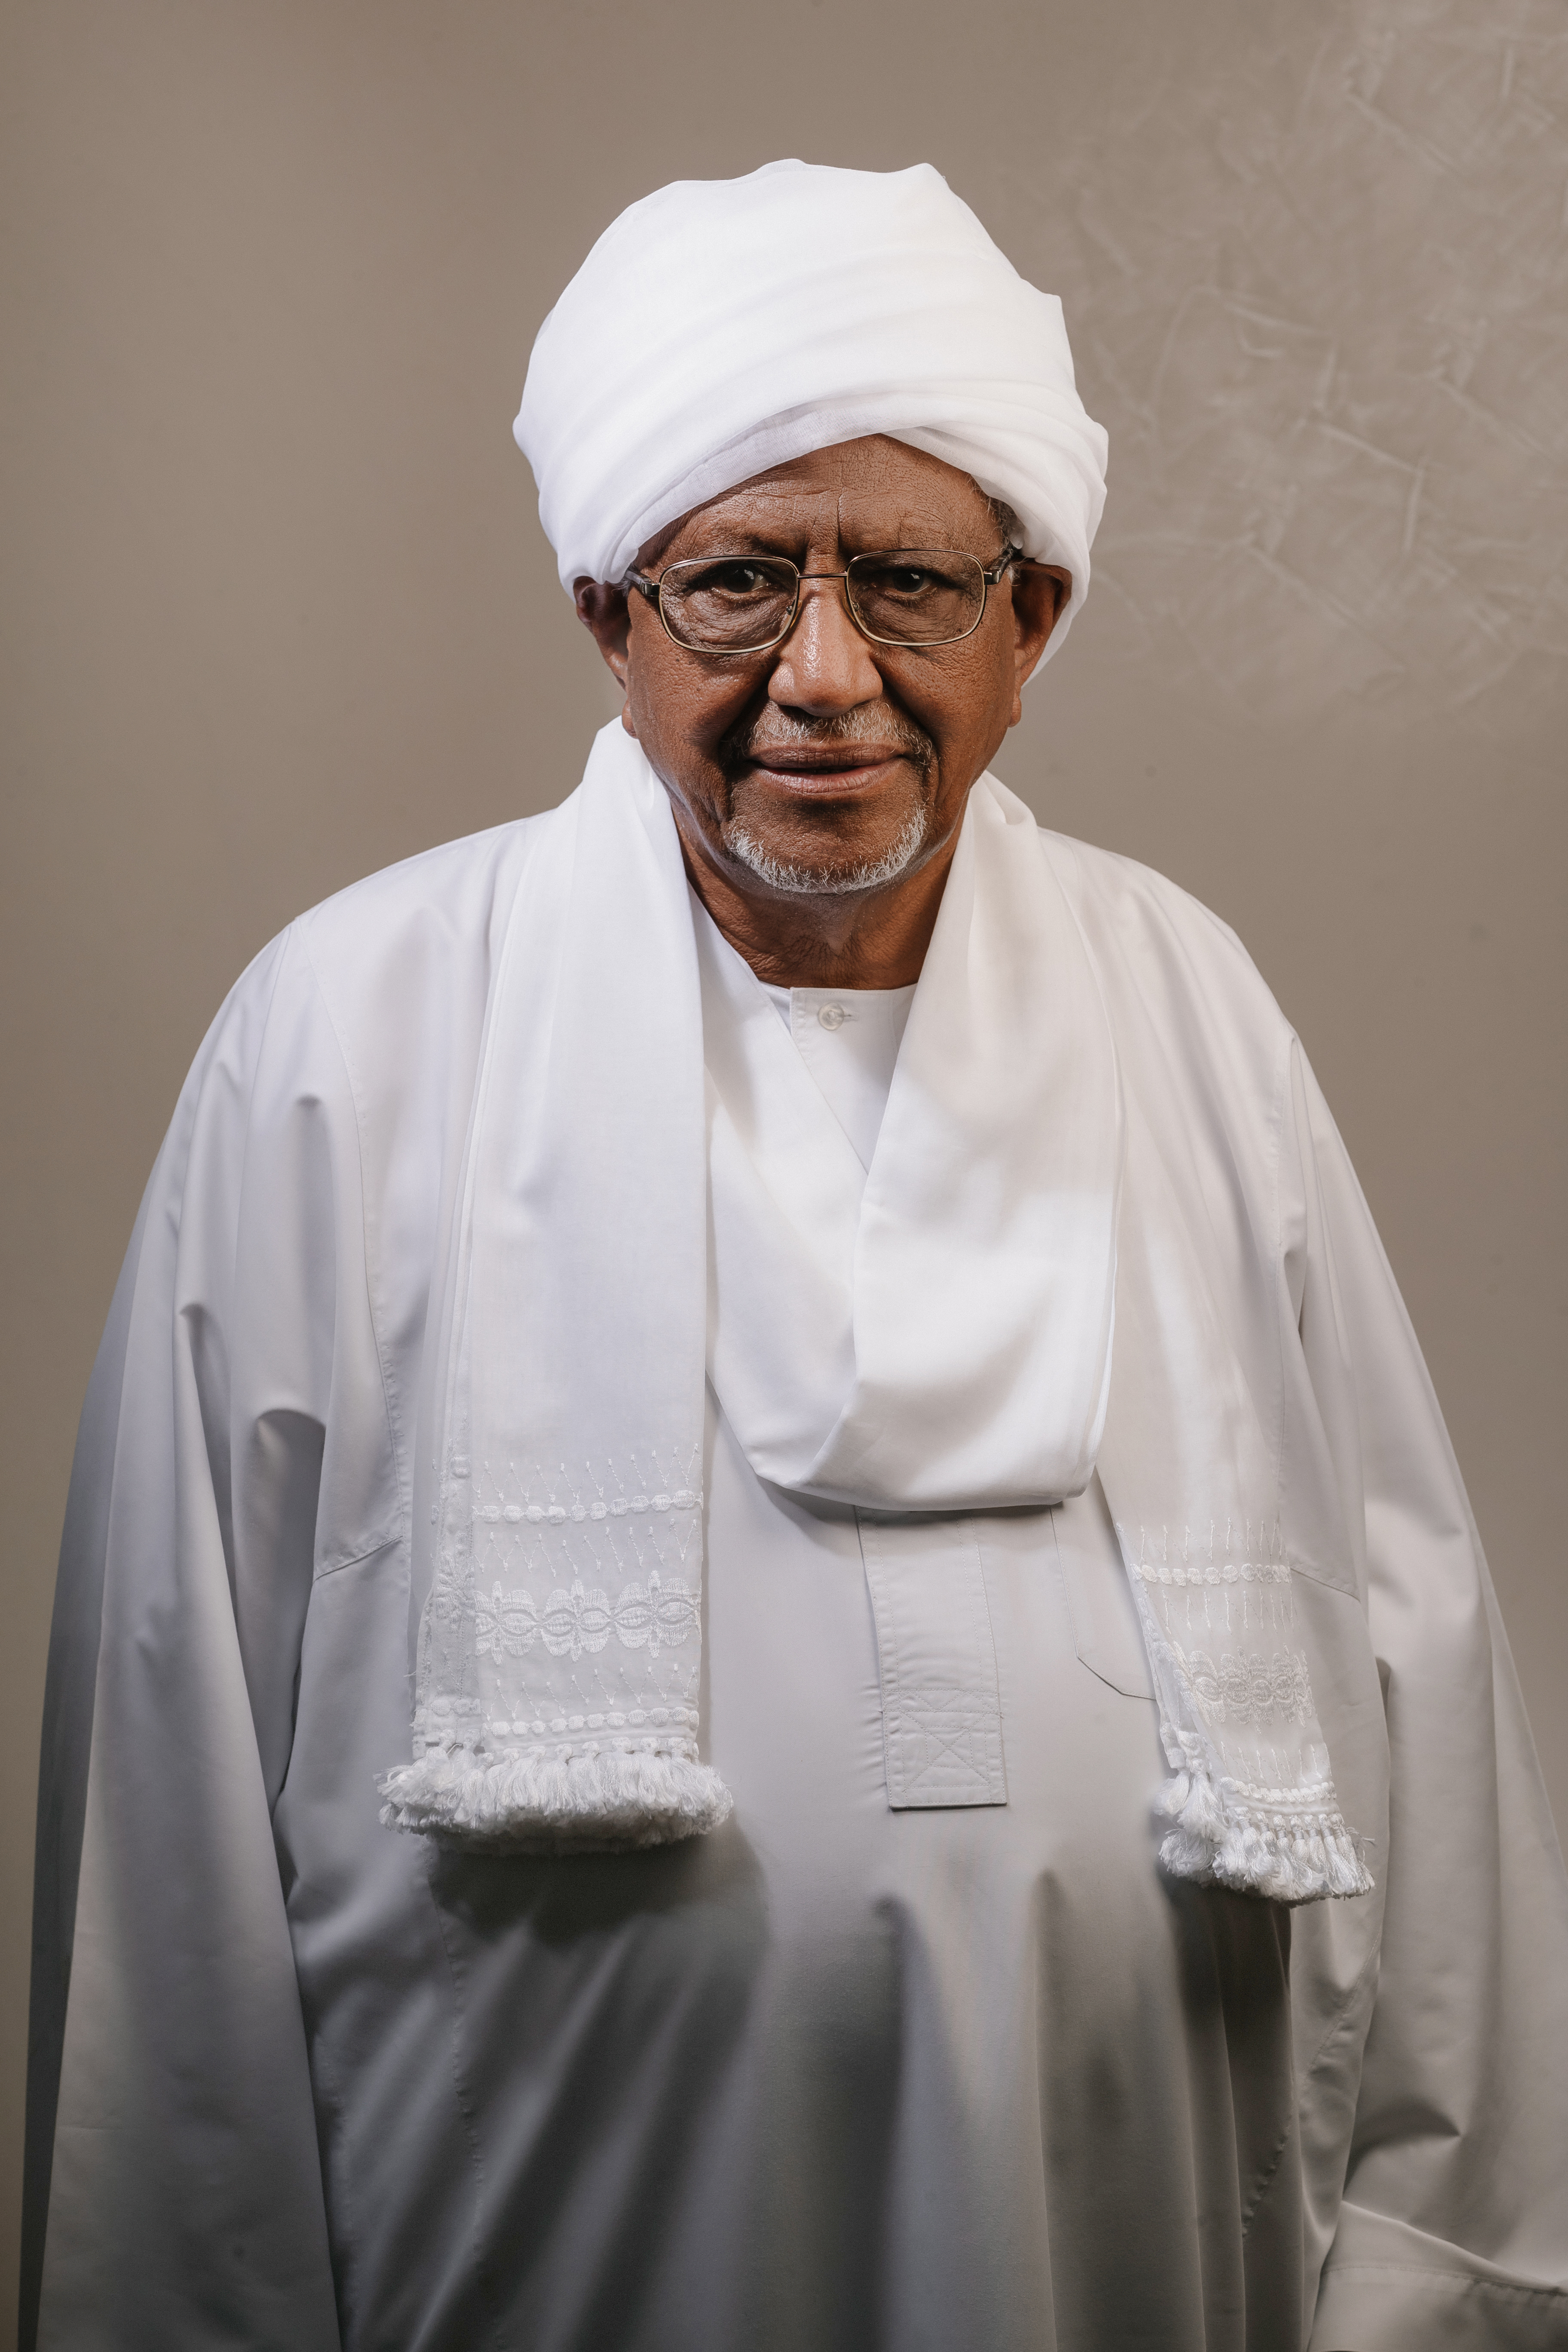 Abdulmotleb Ali Ahmed